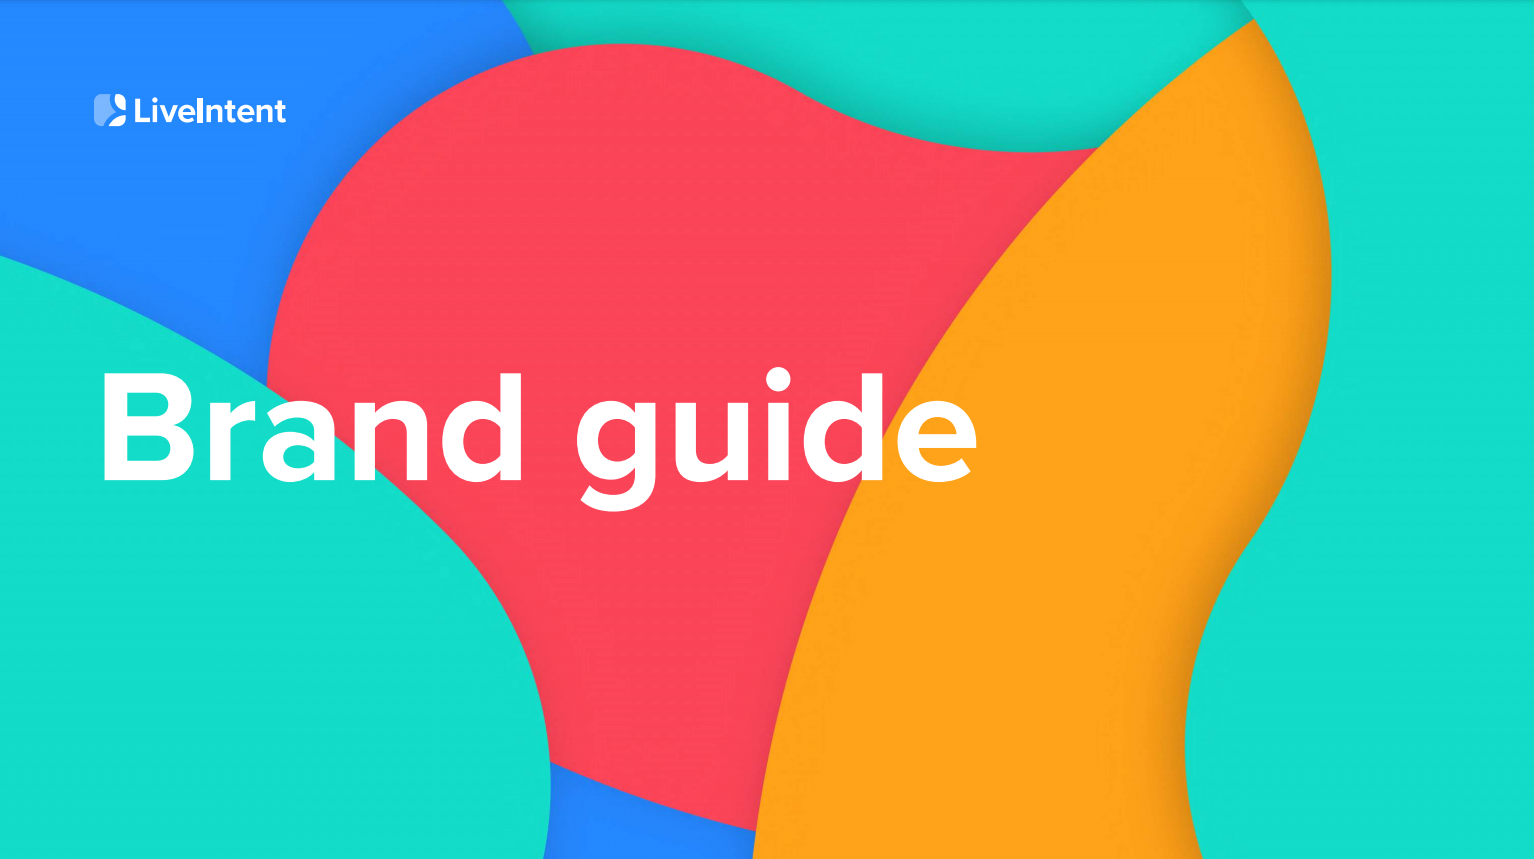 LiveIntent's Brand Guide